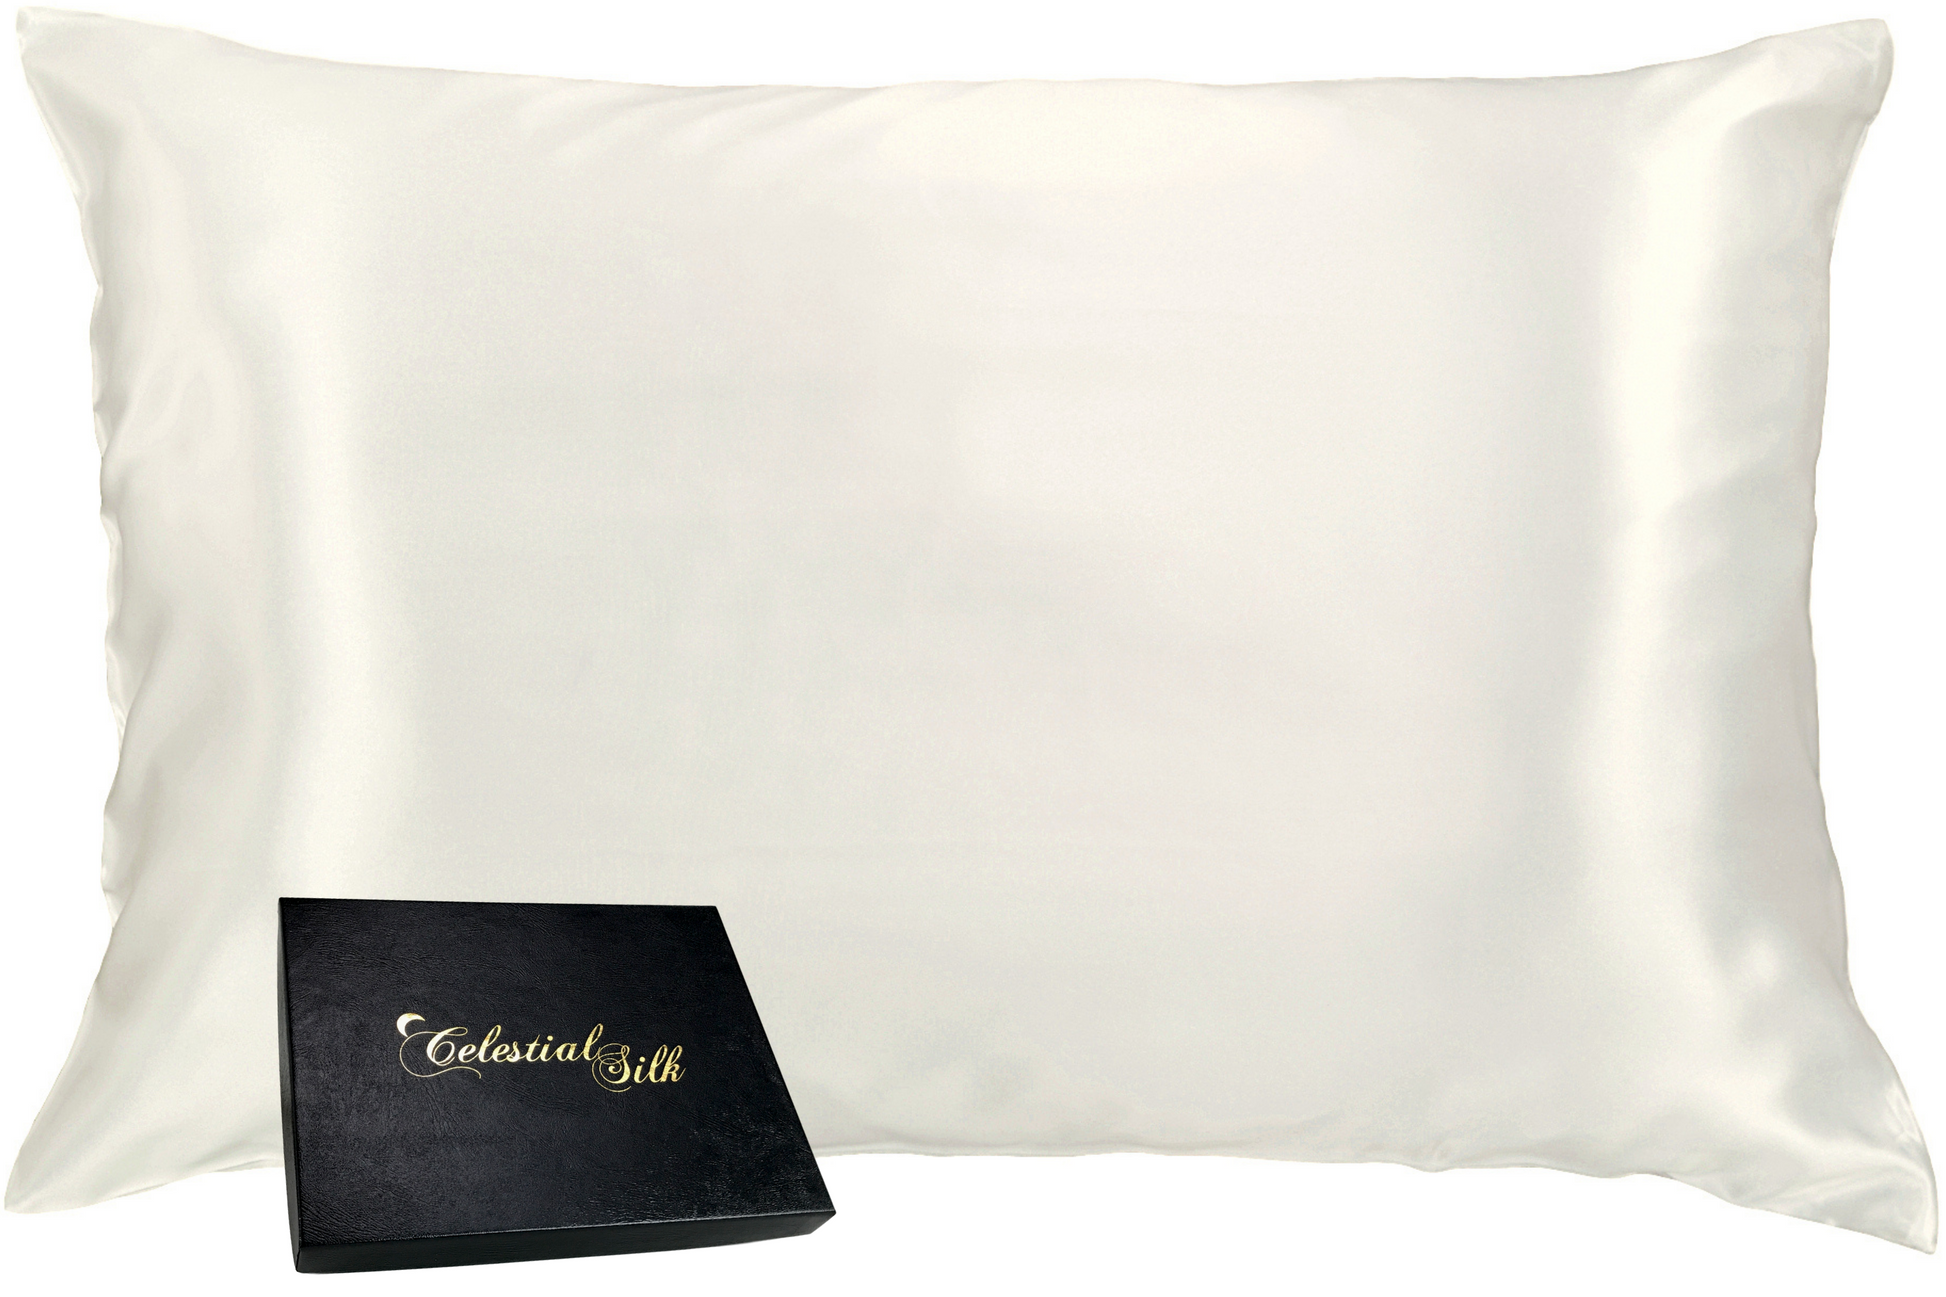 Celestial Silk undyed ivory mulberry silk pillowcase